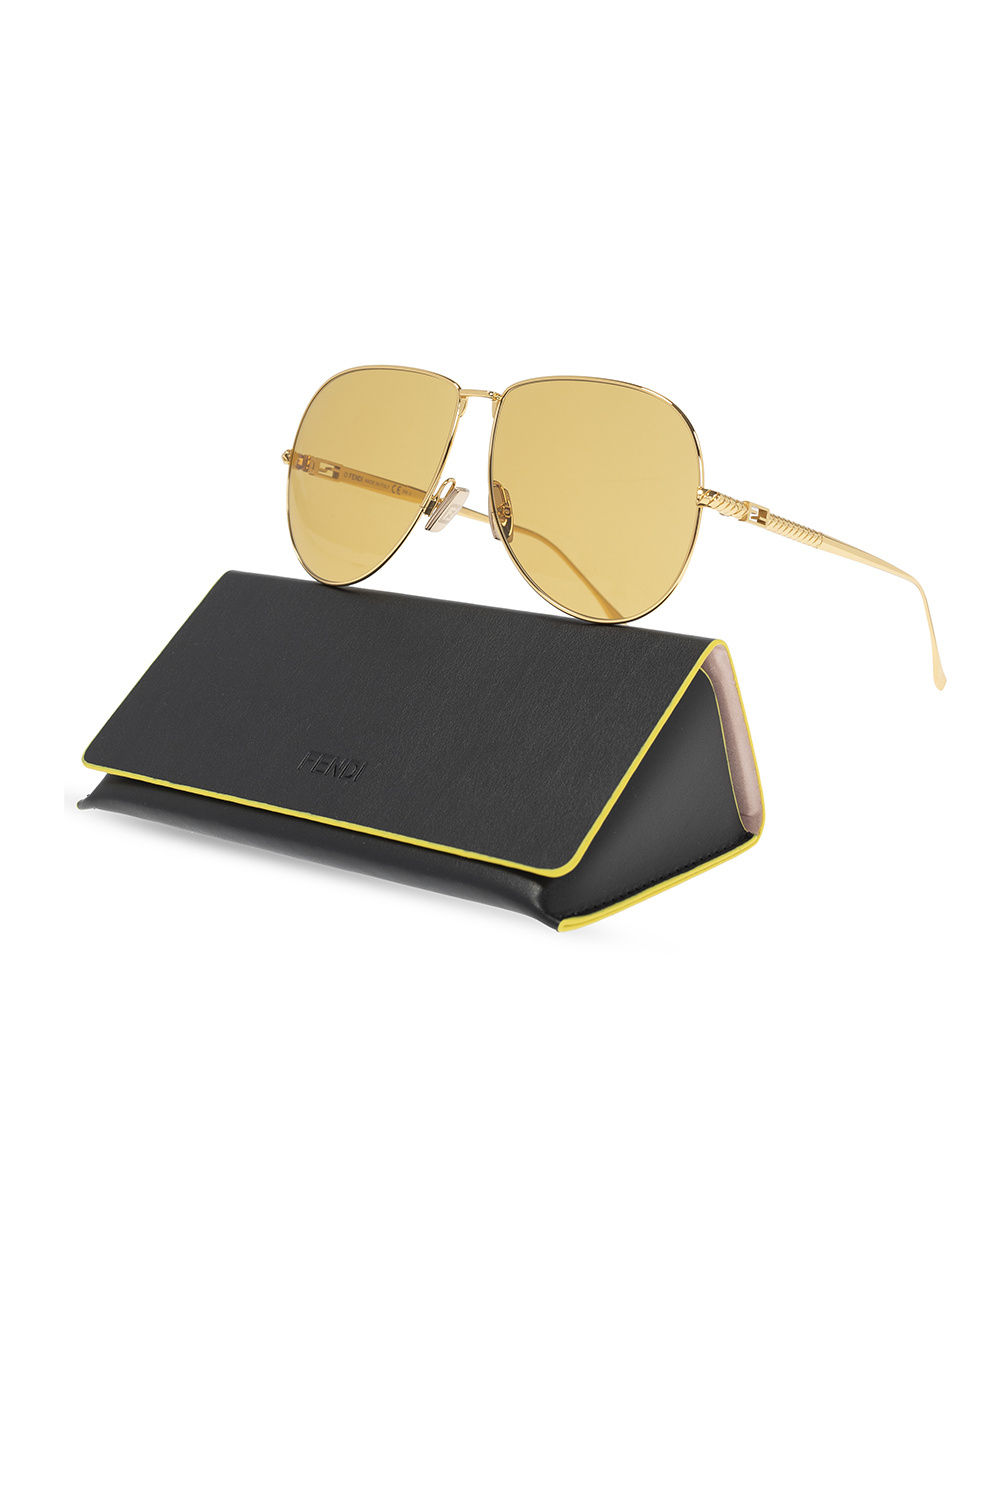 Fendi sunglasses pearlescent with logo